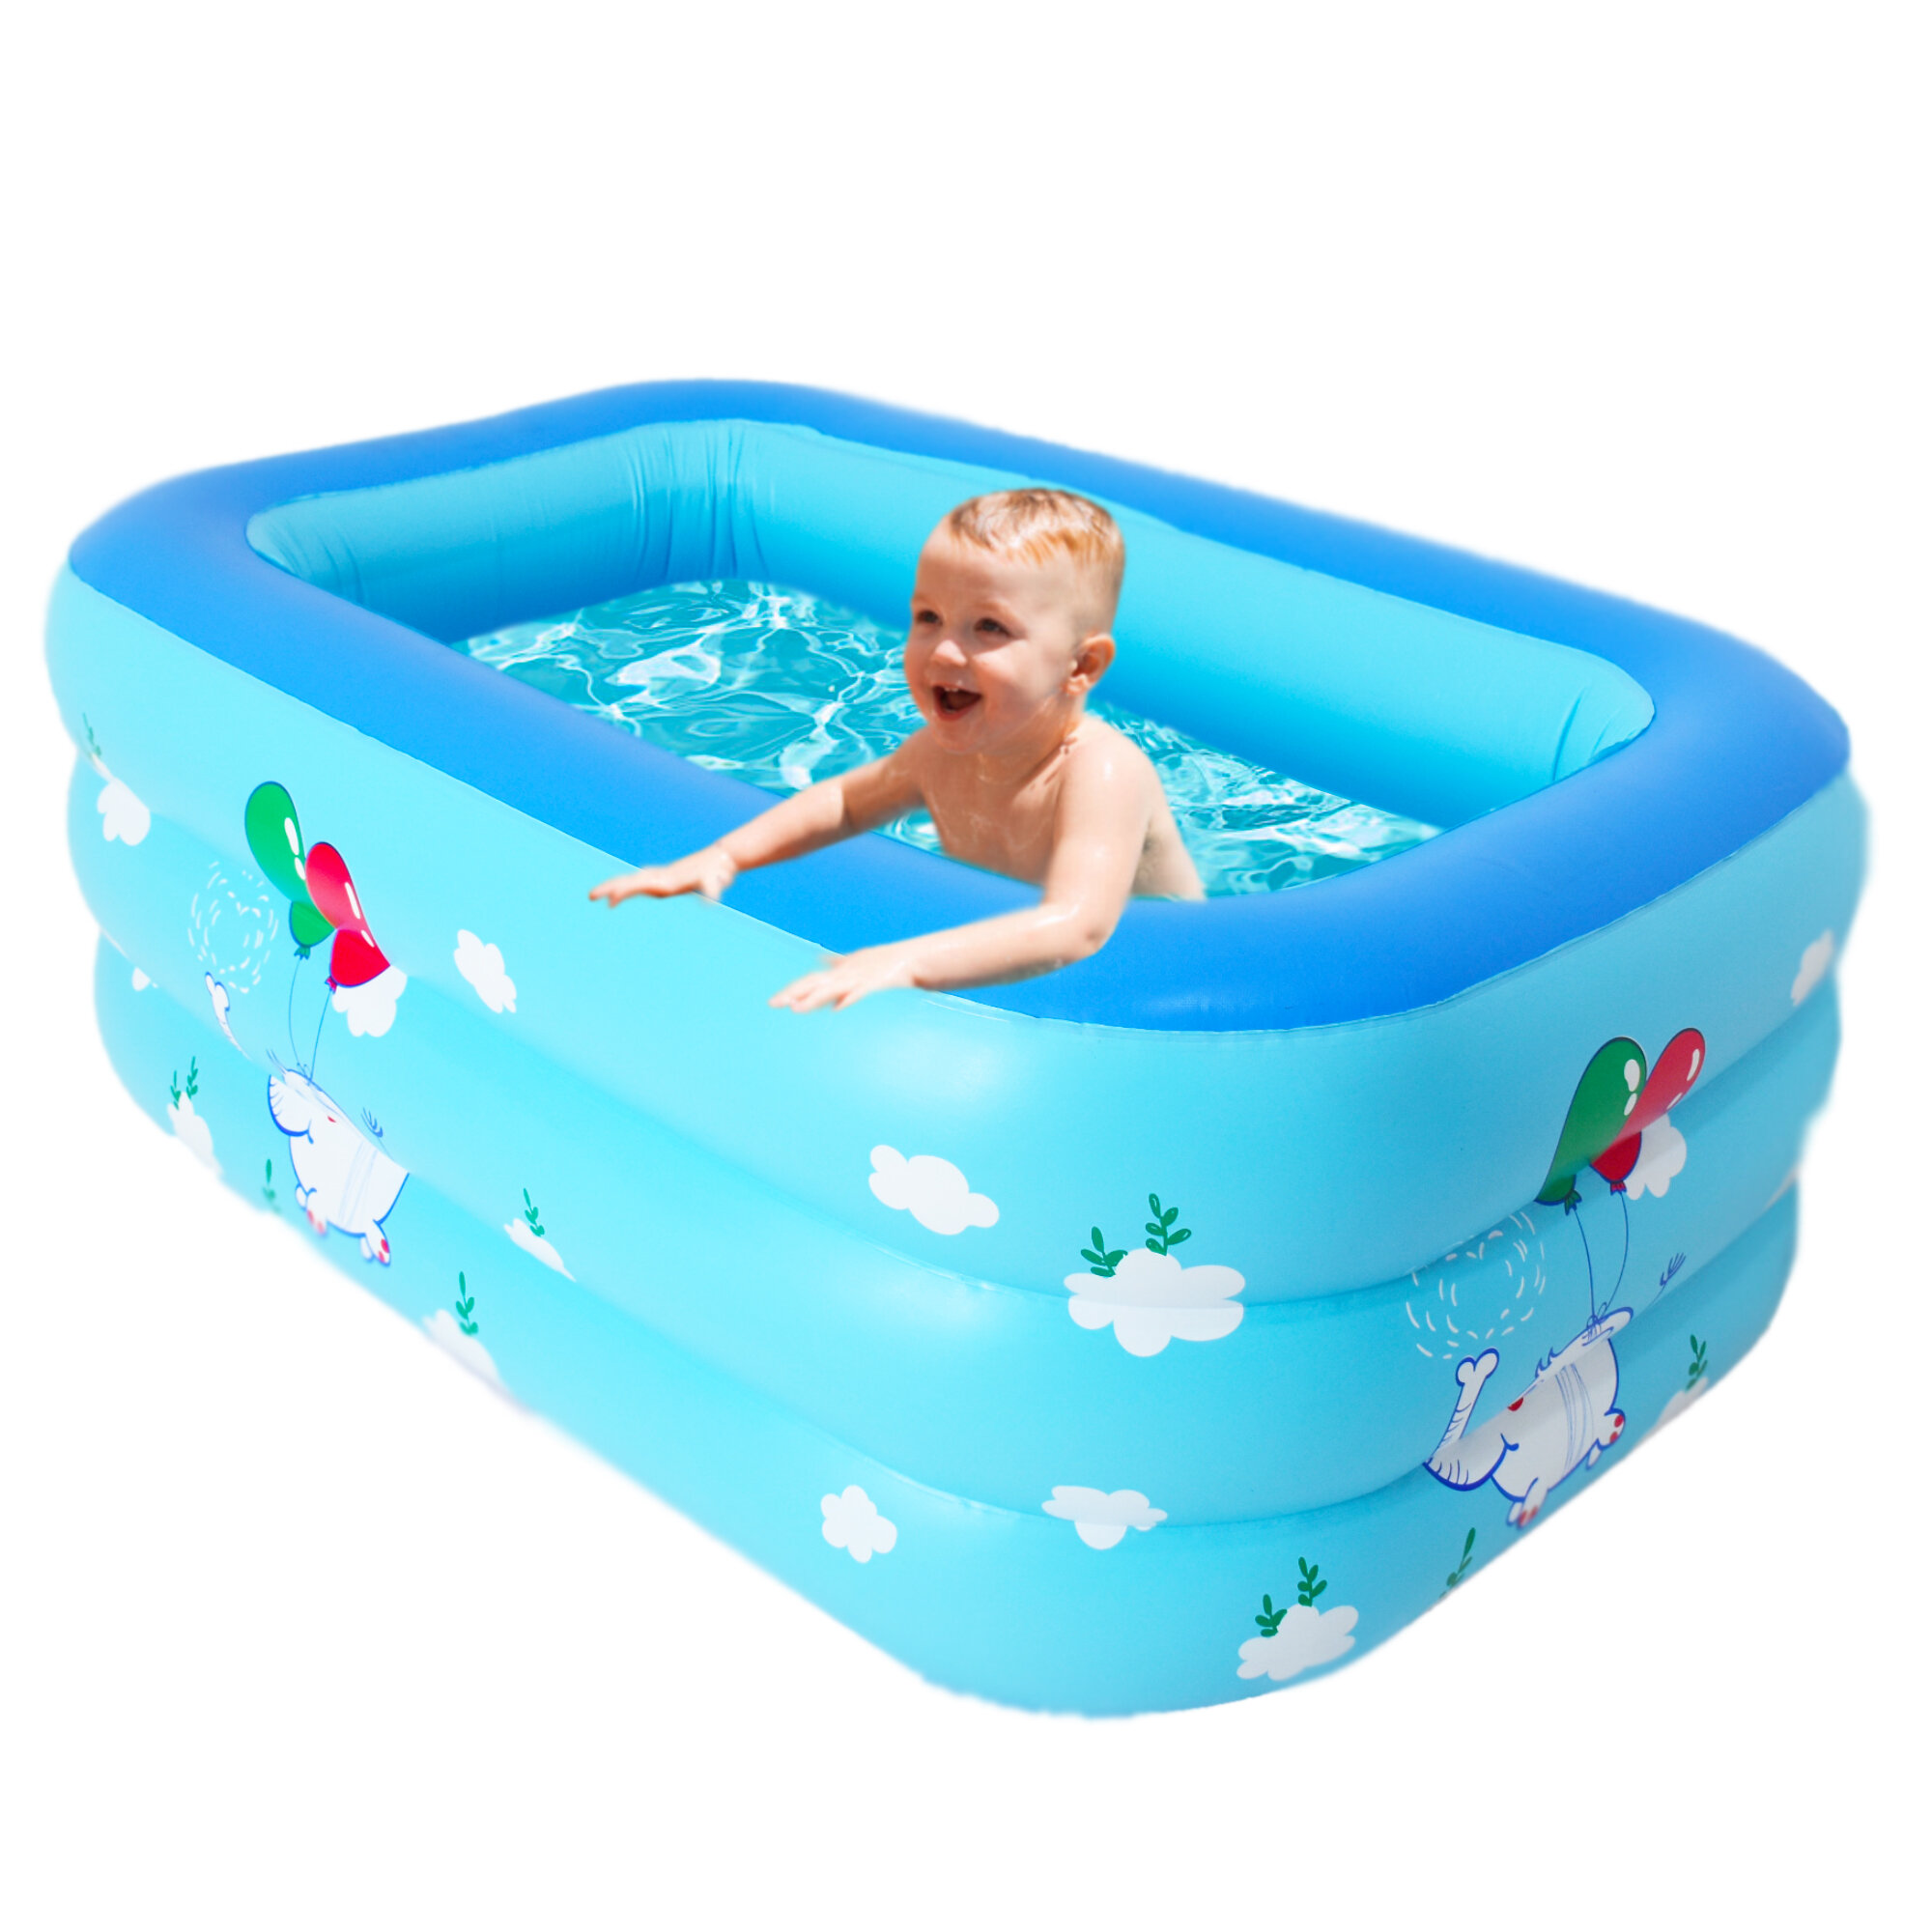 BabySPA Home Spa 3 Layer Pool (150 x 100 x 53cm)